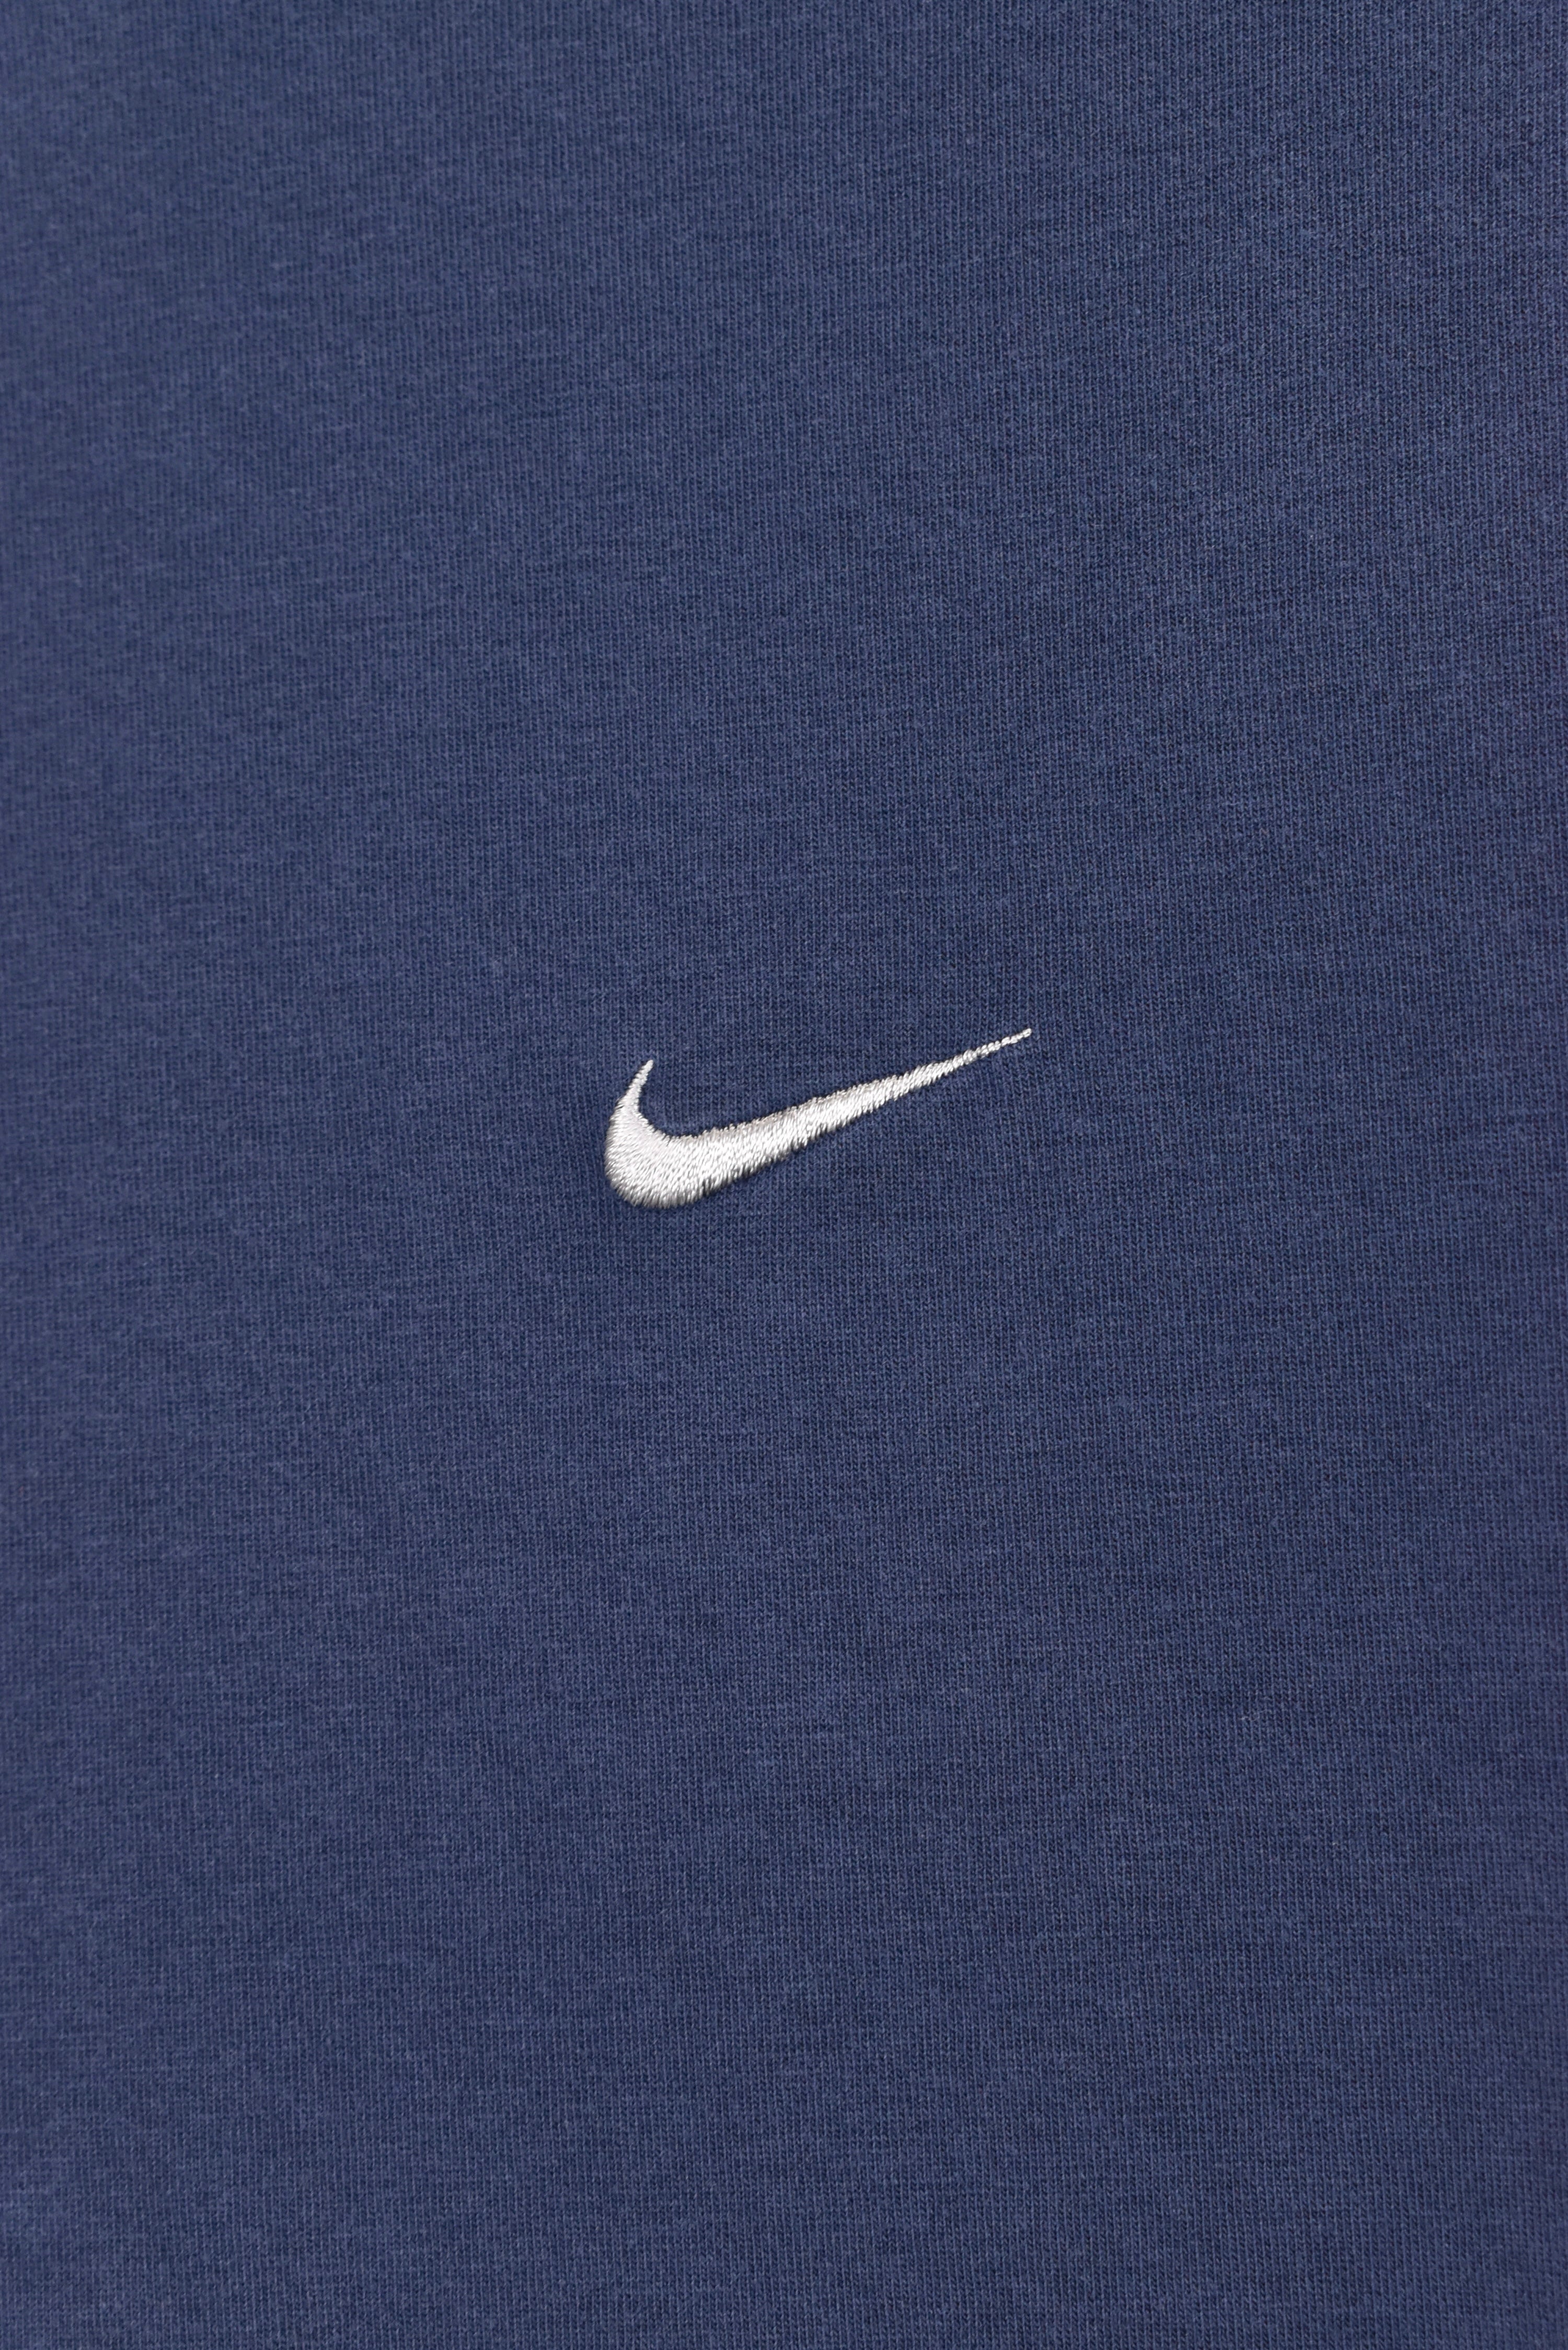 Vintage Nike shirt, Dri-fit navy blue embroidered tee - AU M NIKE